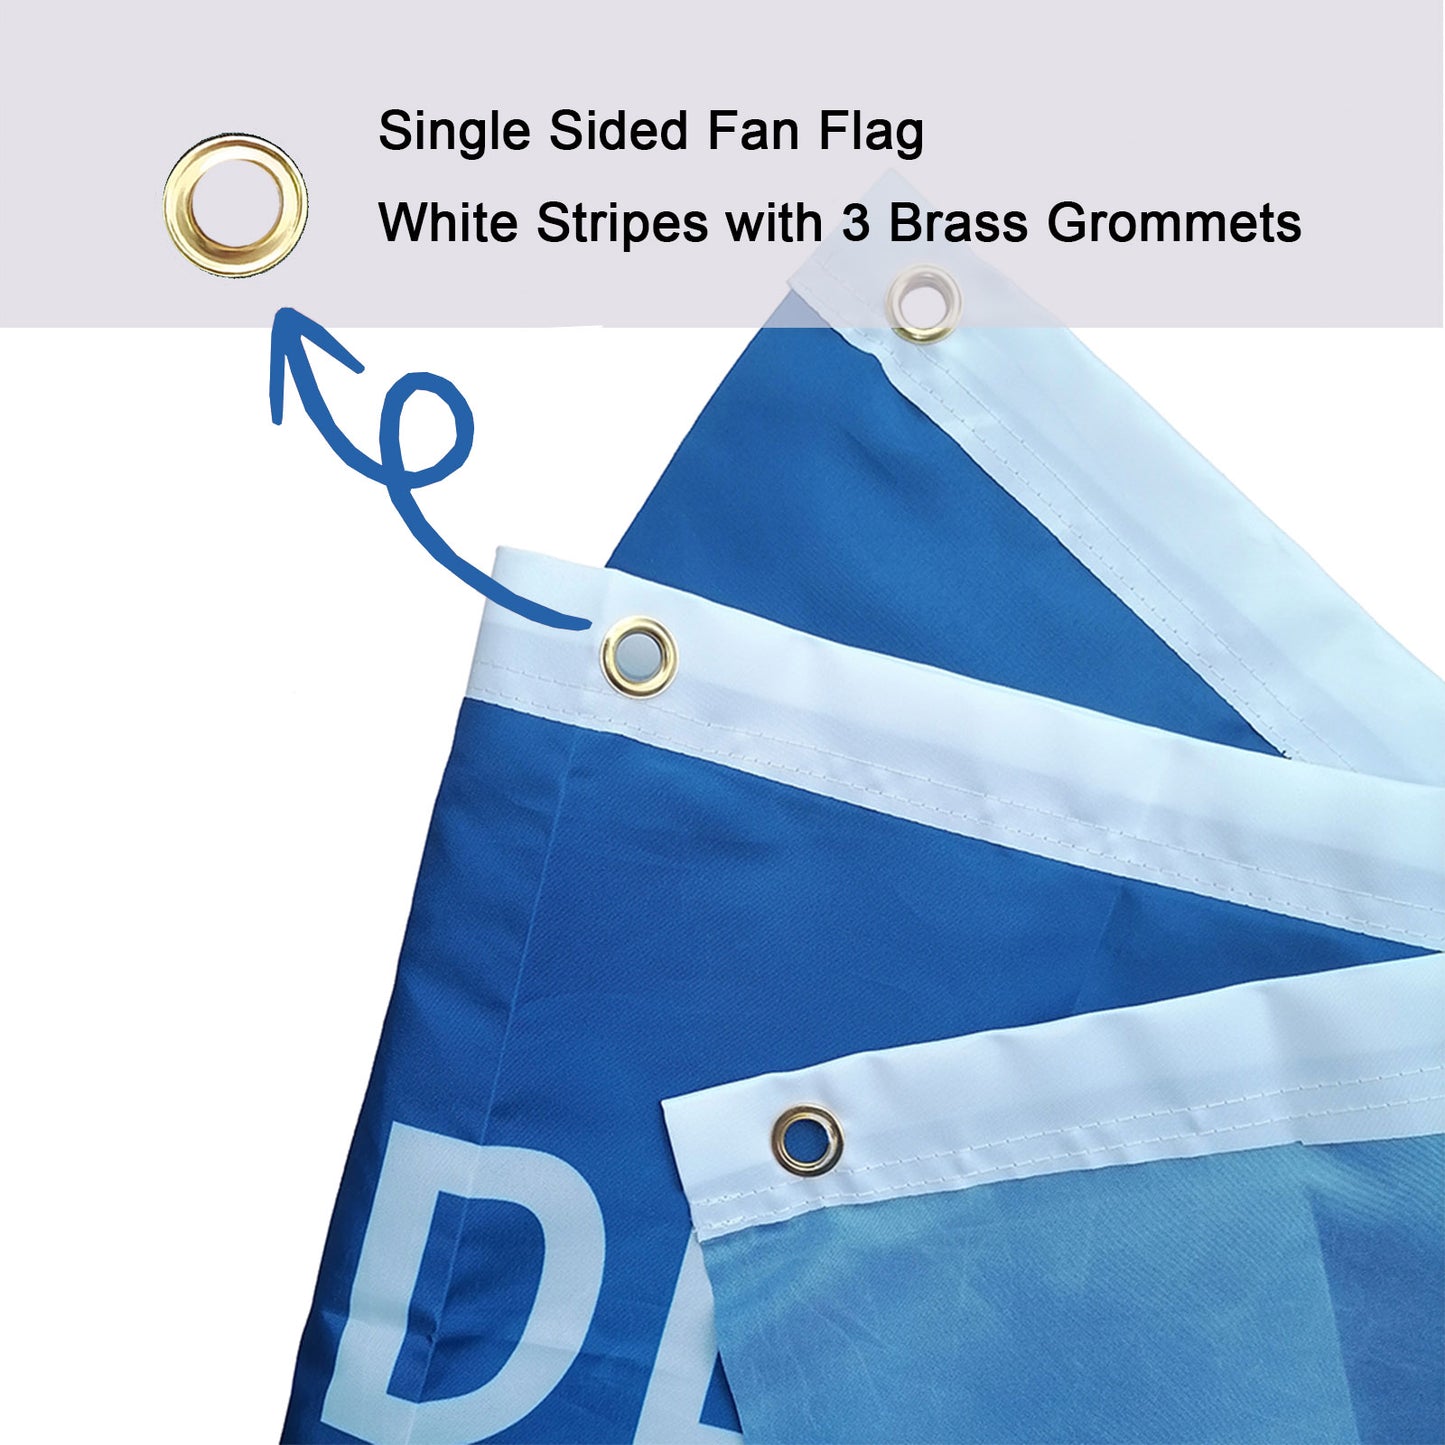 Benutzerdefinierte 2 STÜCKE Fan Flagge Personalisierte Bunting Flags Canvas Header Messing Ösen 